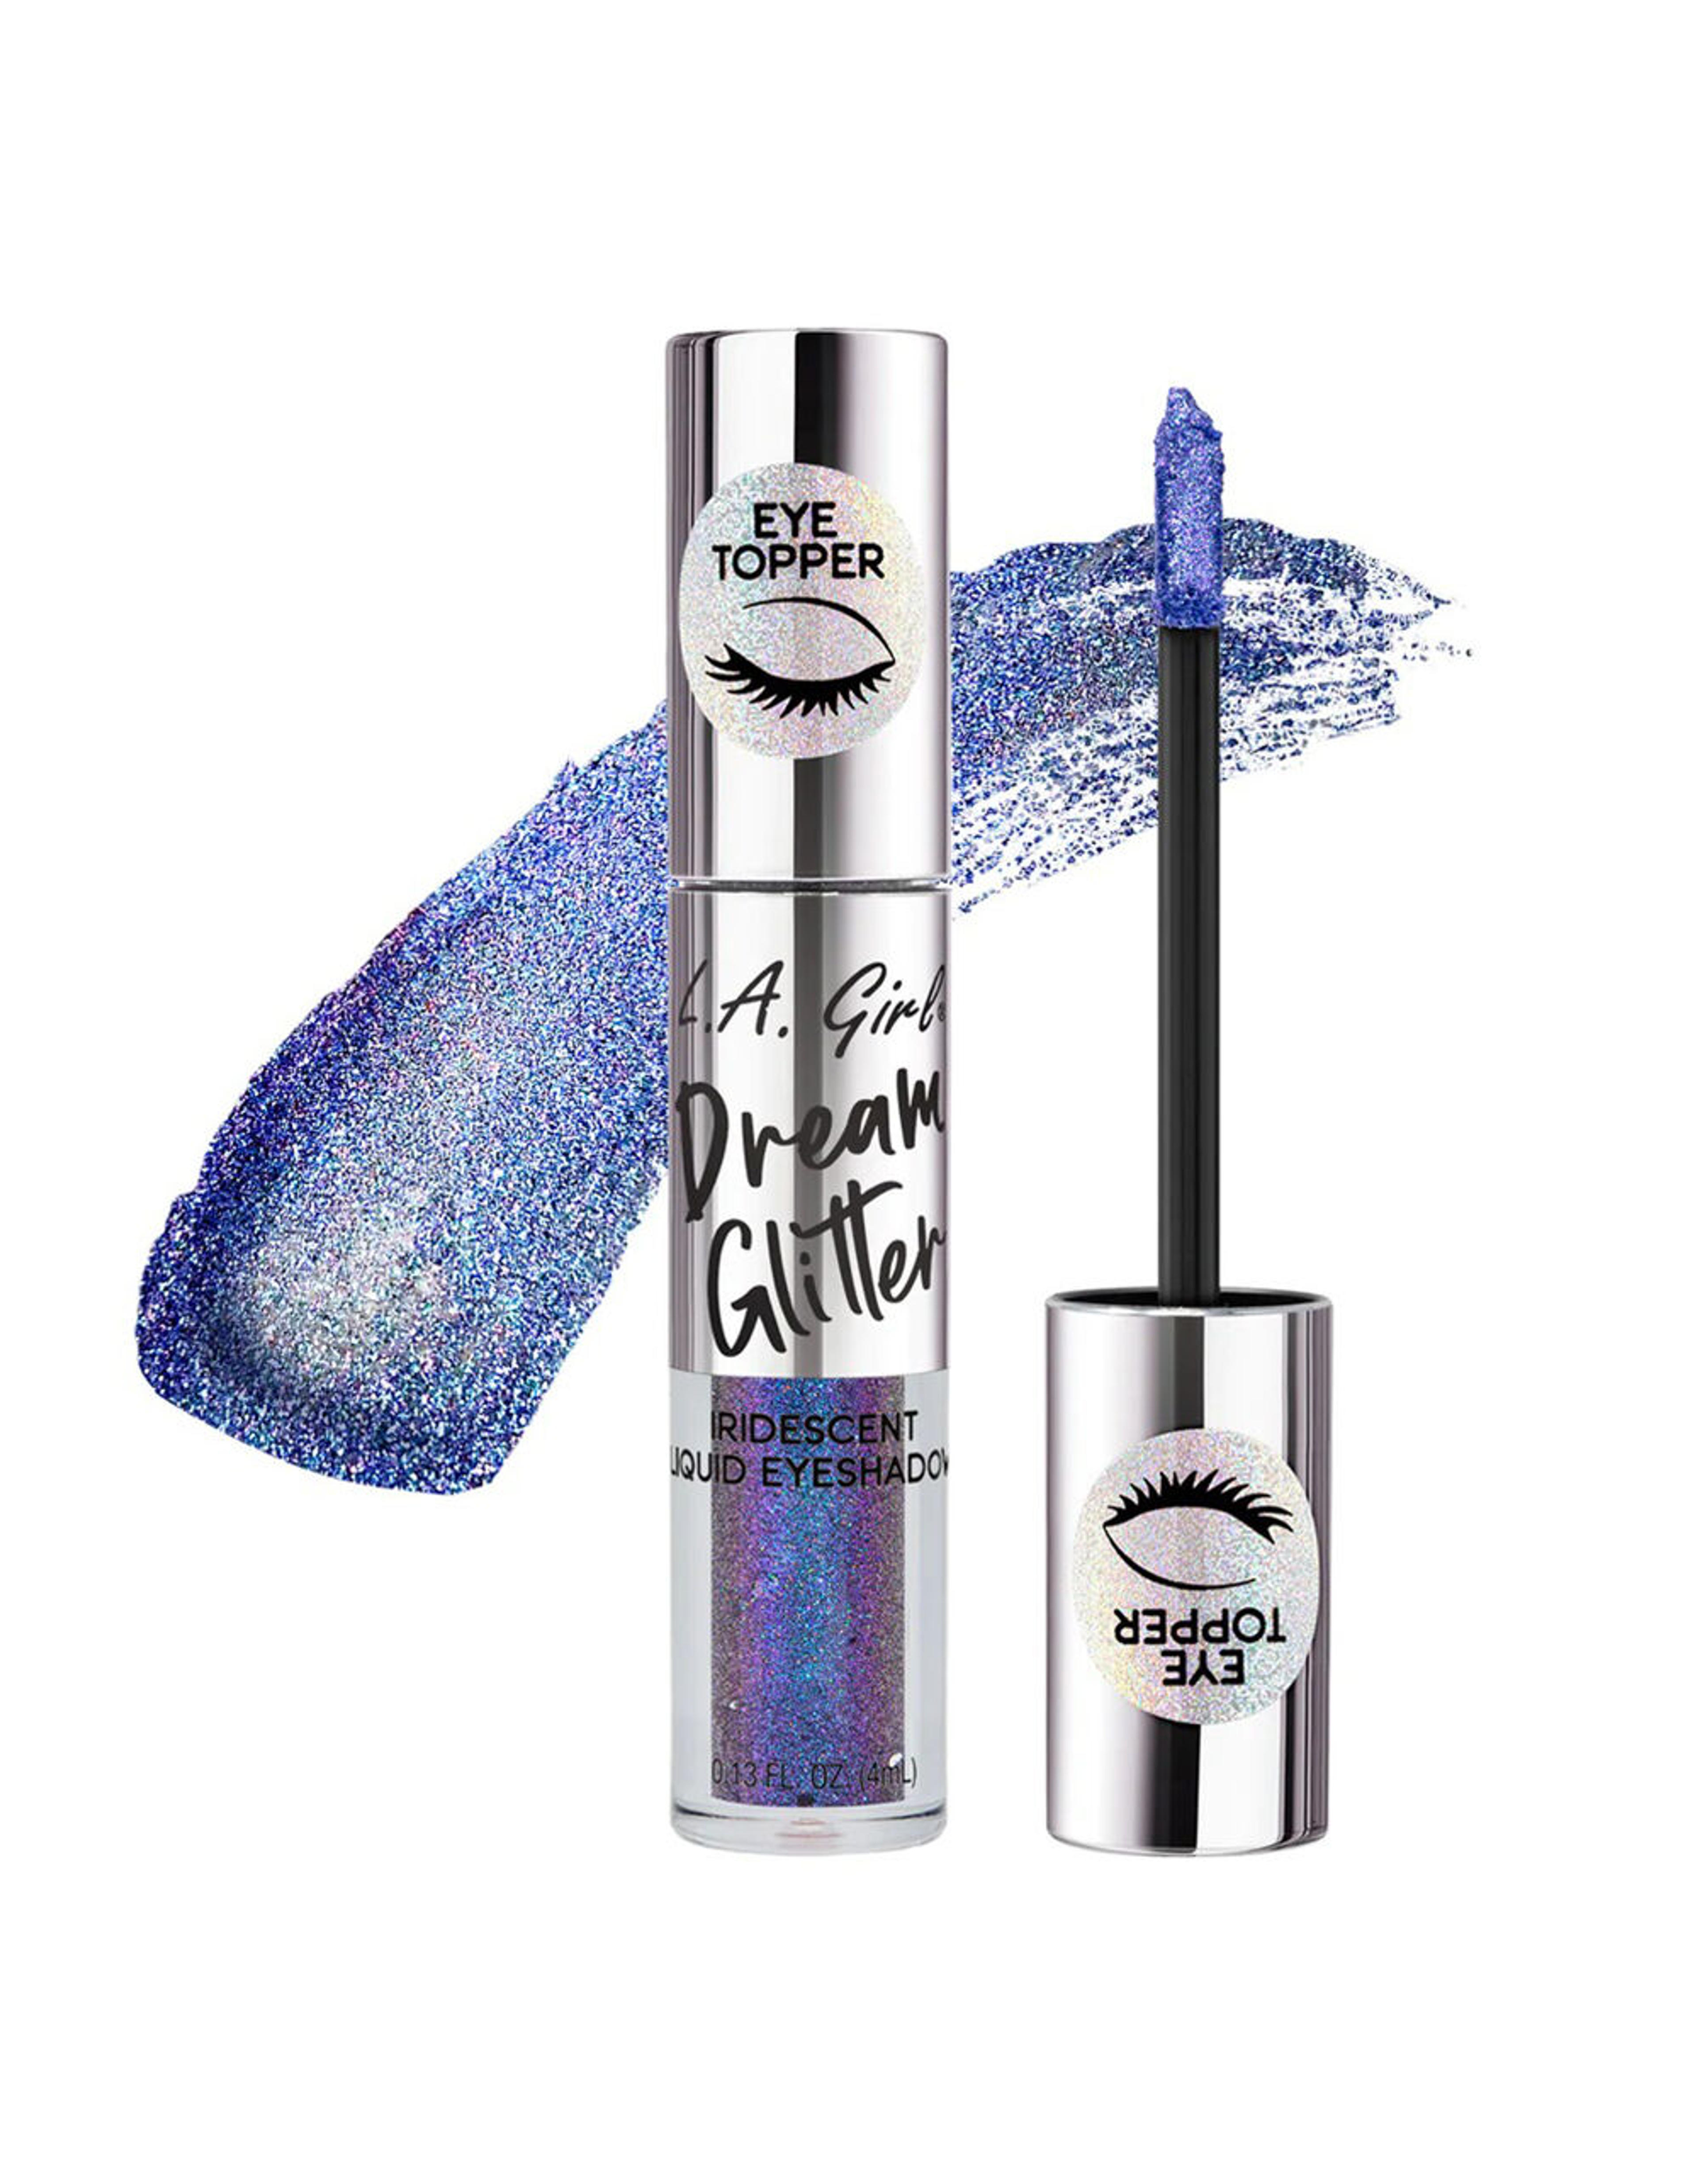 LA GIRL Dream Glitter Liquid Eyeshadow - BLUE | Tillys